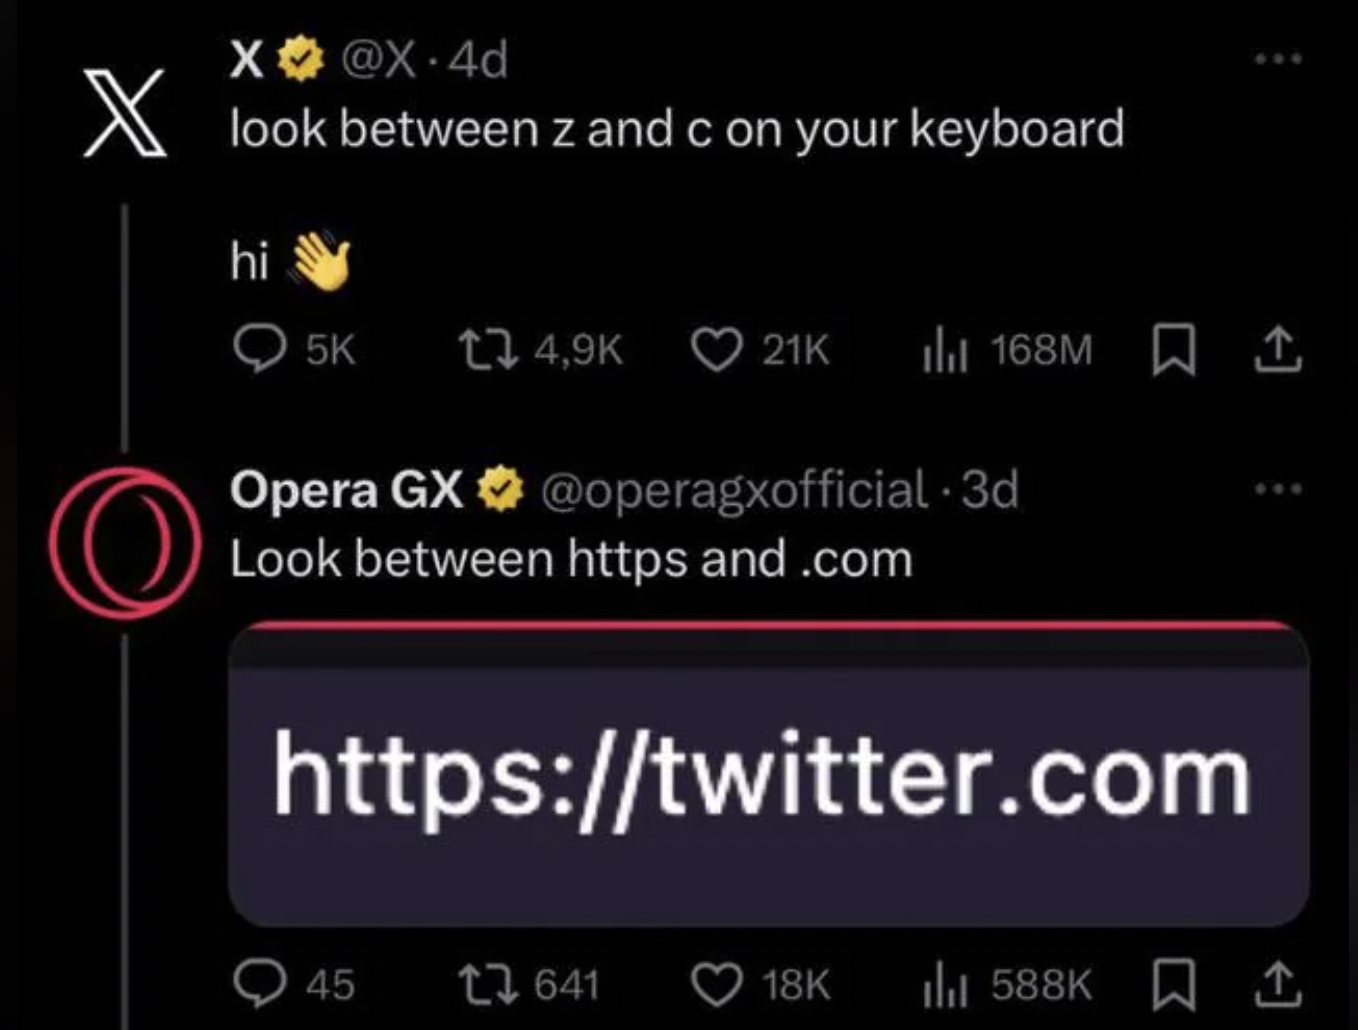 screenshot - X 4d look between z and c on your keyboard hi 5K 21K l 168M Opera Gx 3d O Look between https and .com 45